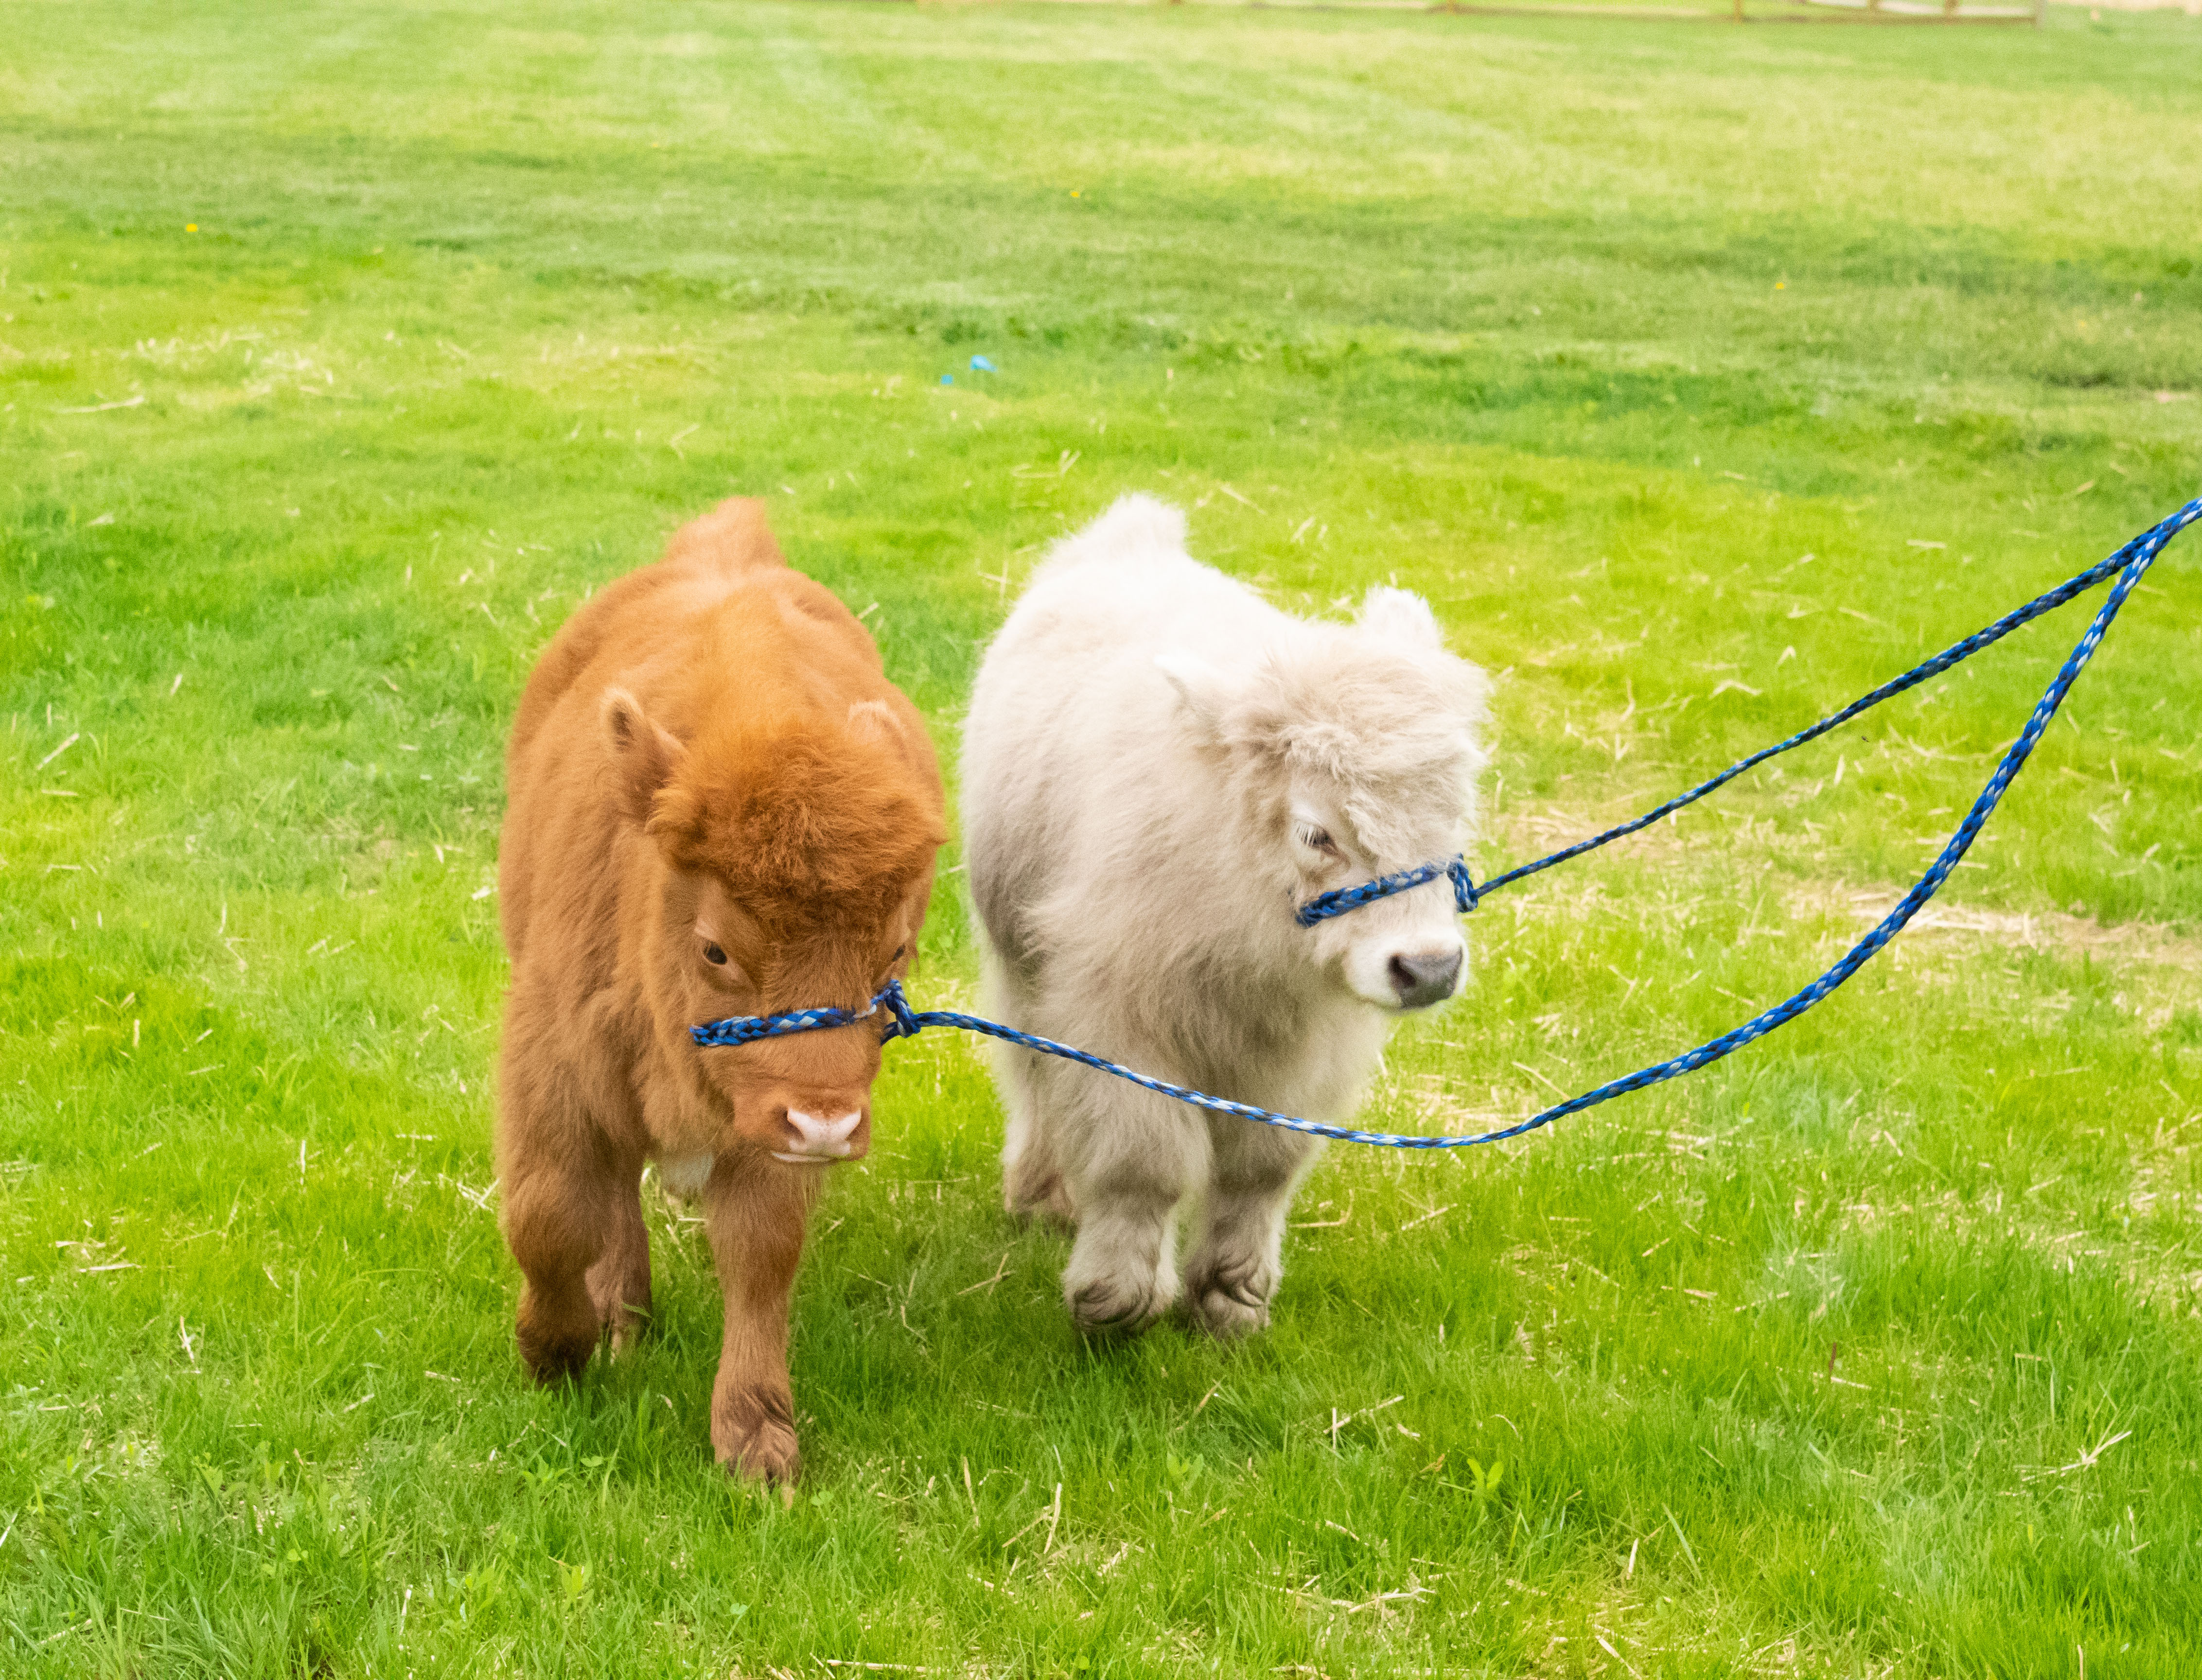 Fluffy Mini-Cows gaining popularity as charming farm pets